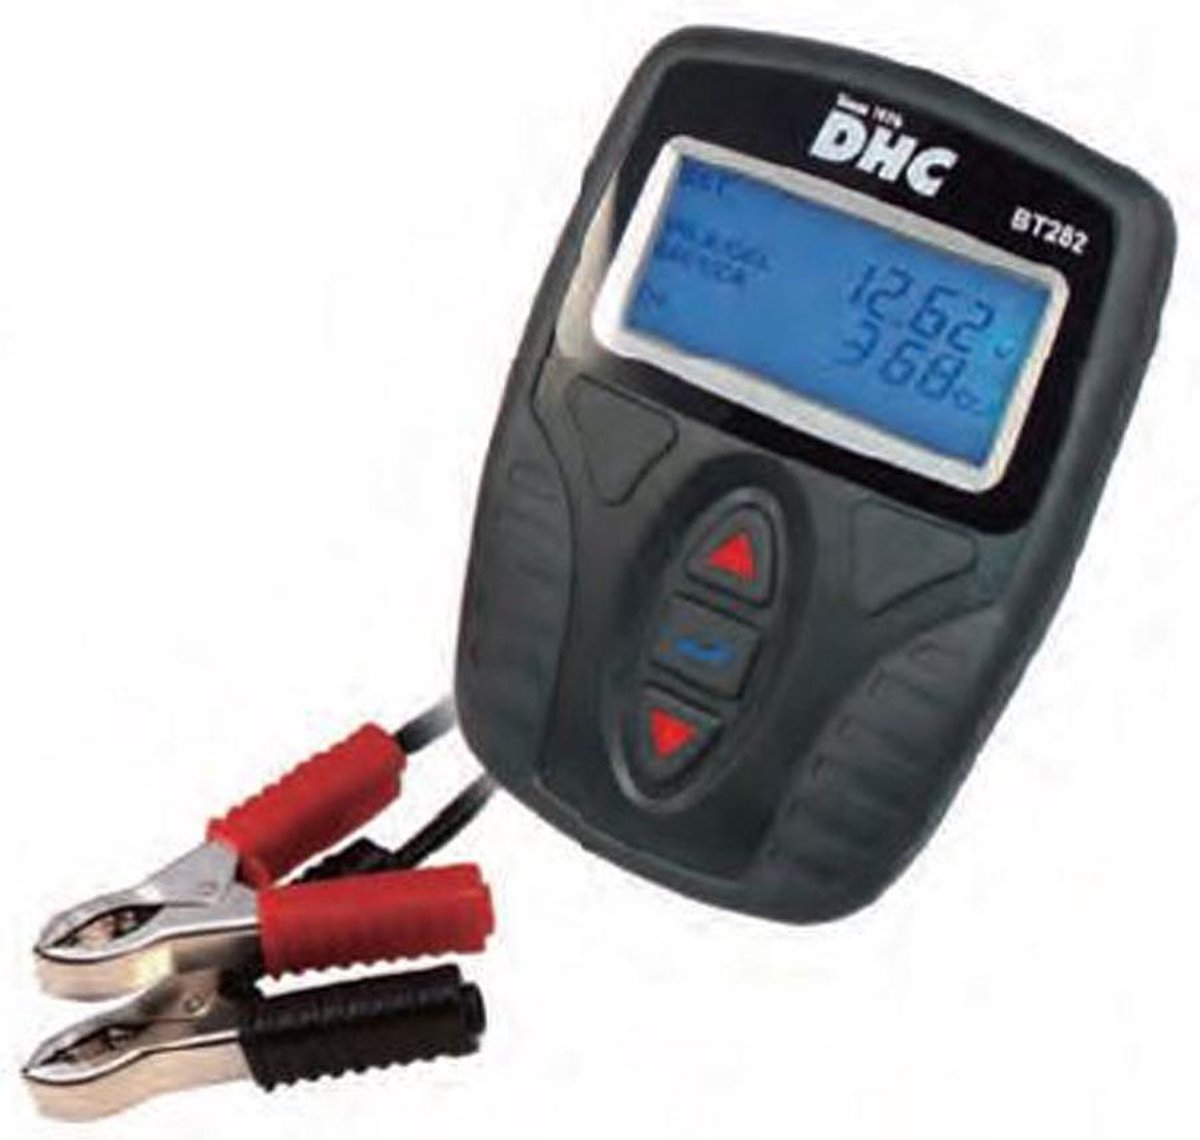 DHC BT282 Batterij Tester Voor 12V Start-stop Auto Batterijen Engelse Taal 4250889663384